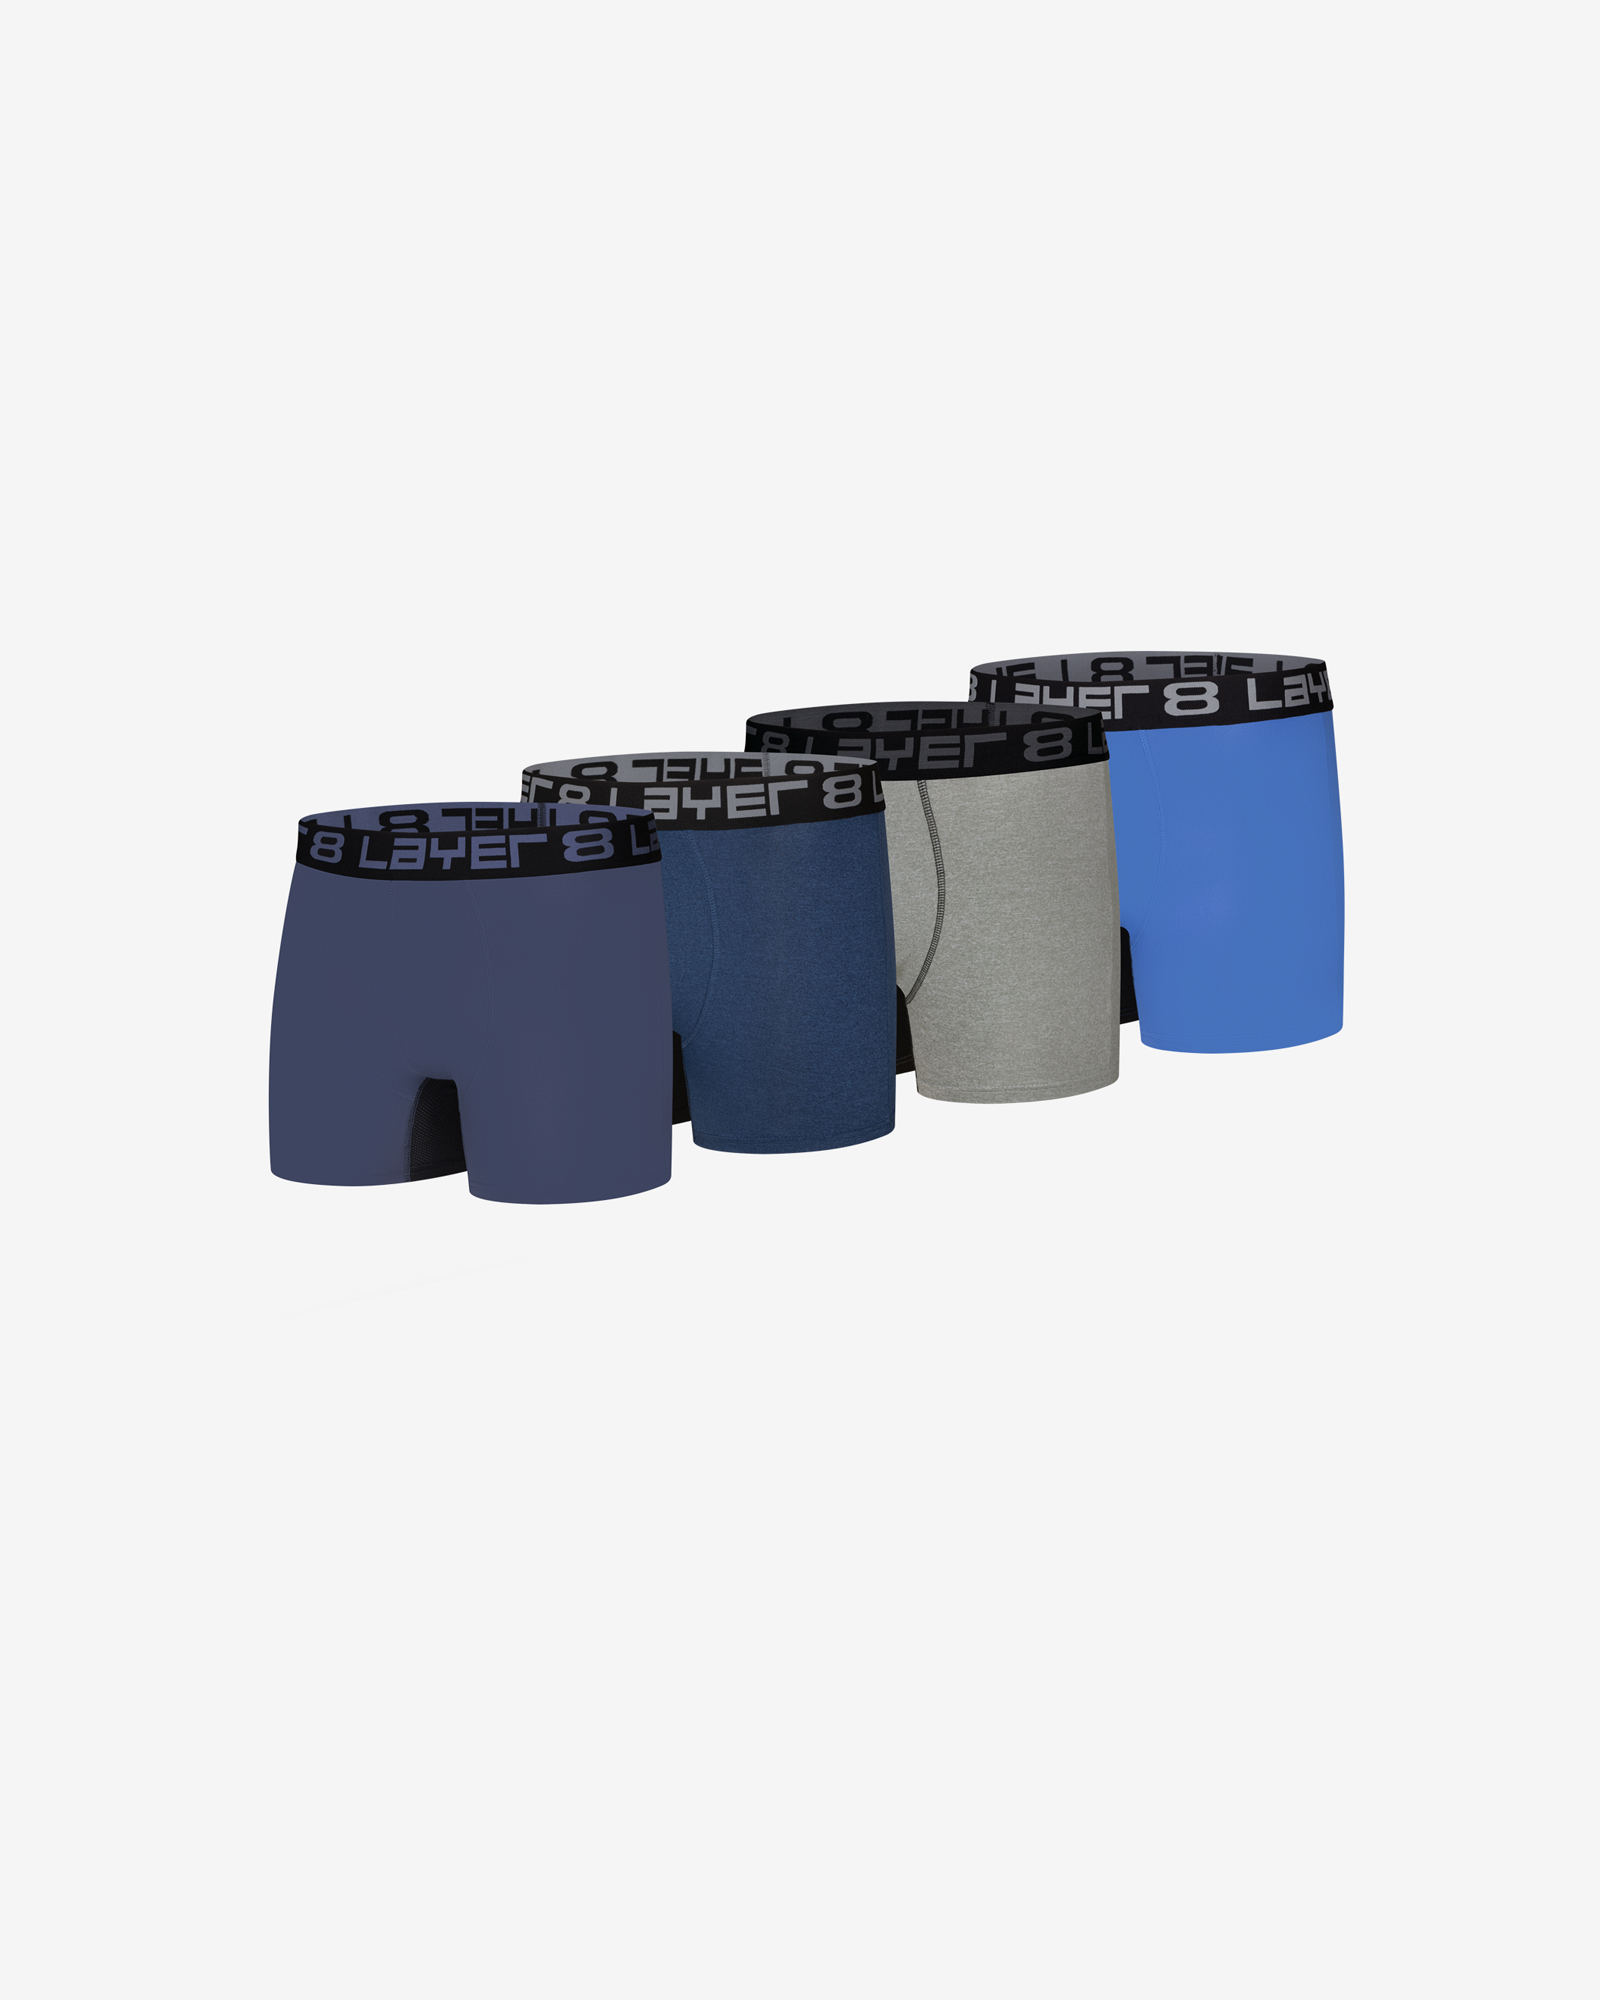 Buy Layer 8 Men's 4-Pack Everyday Low Rise Briefs Underwear Online